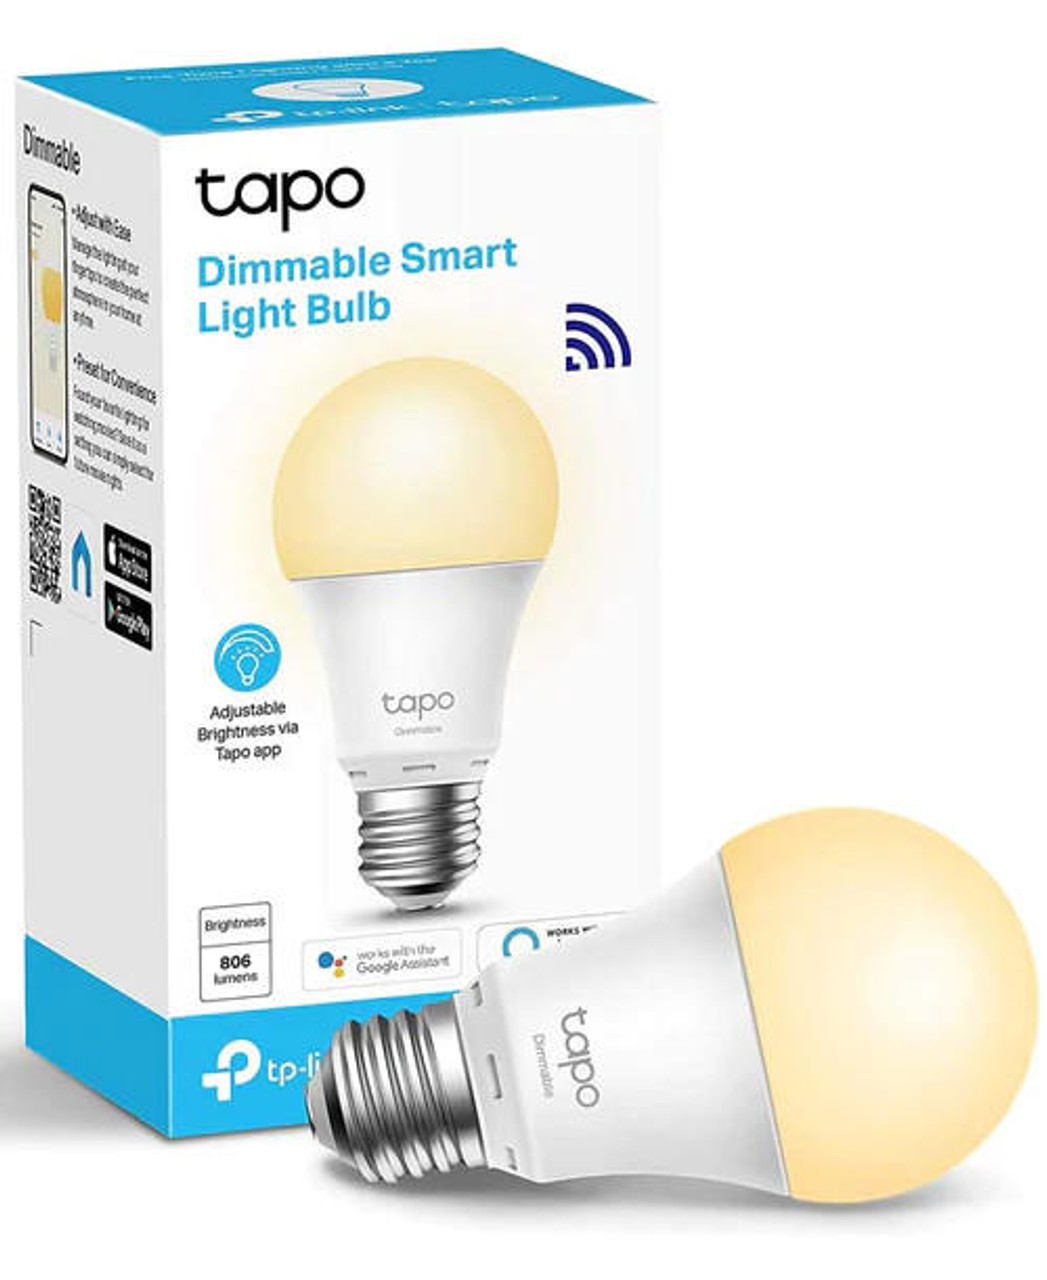 TP-Link Tapo L510B LED Smart Light Bulbs (4 Pack) - WiFi, B22 (Bayonet –  Smart Kiwis - DIY Home Security